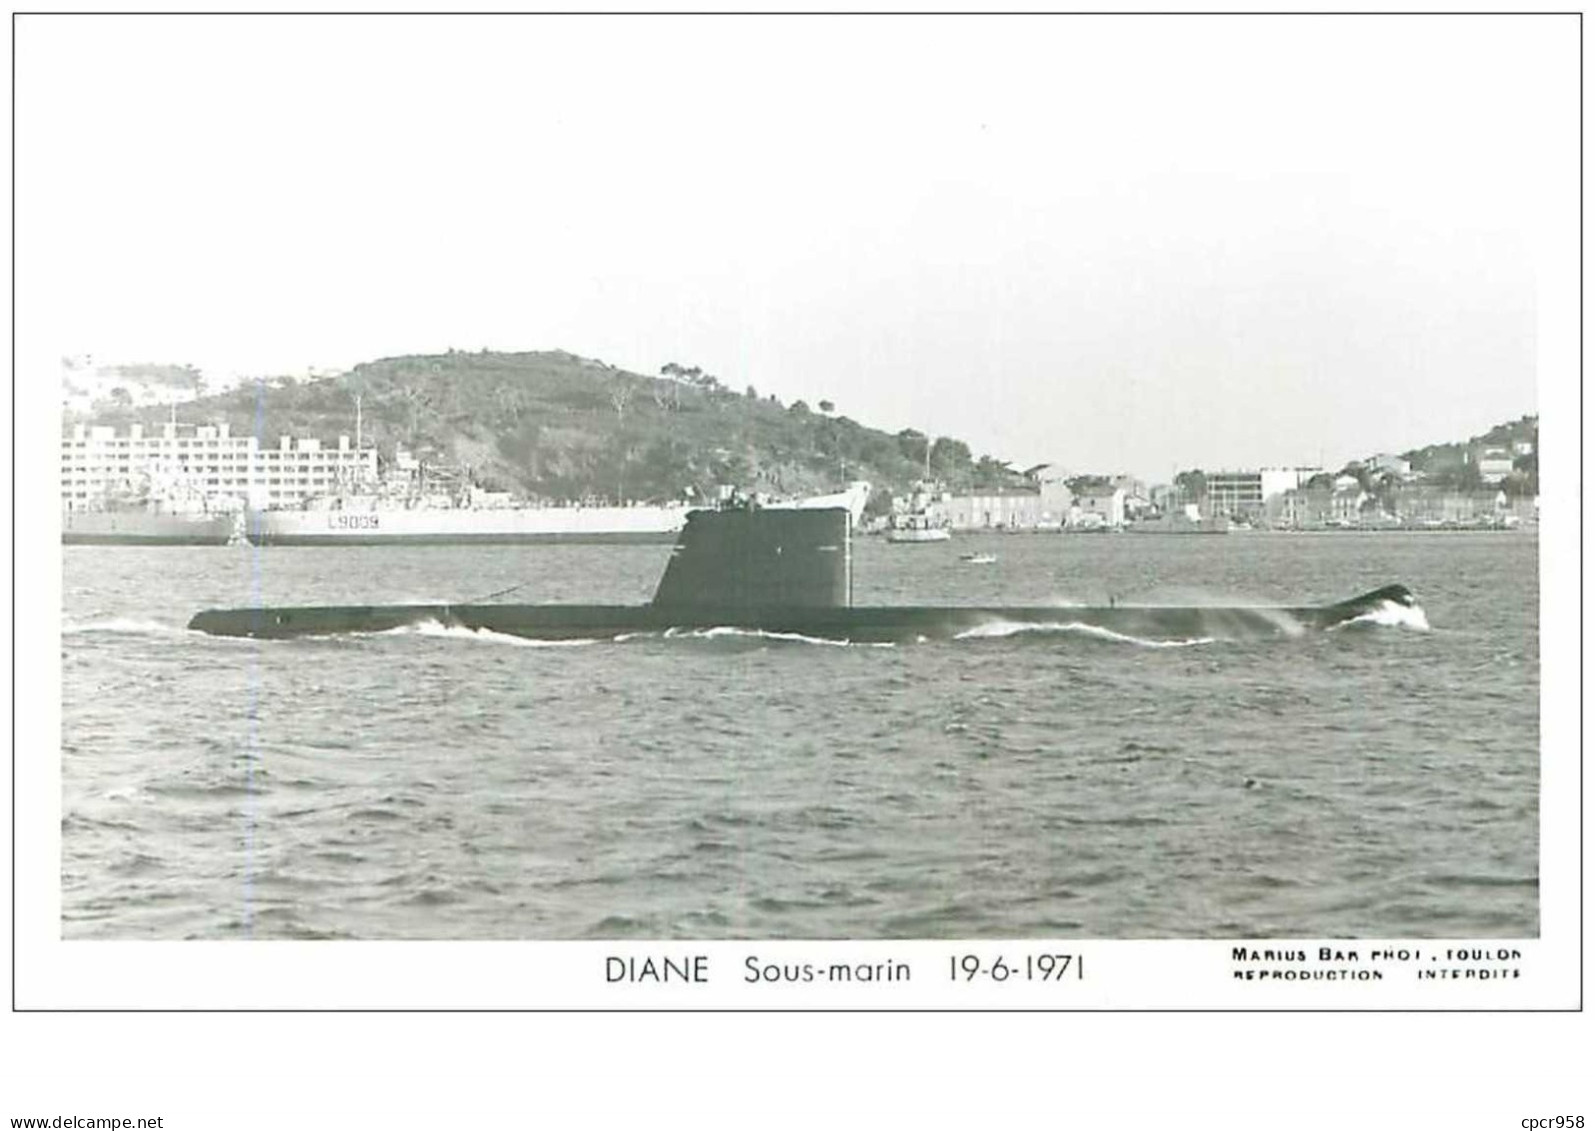 SOUS-MARINS.n°24877.PHOTO DE MARIUS BAR.DIANE.19.6.1971 - Submarines